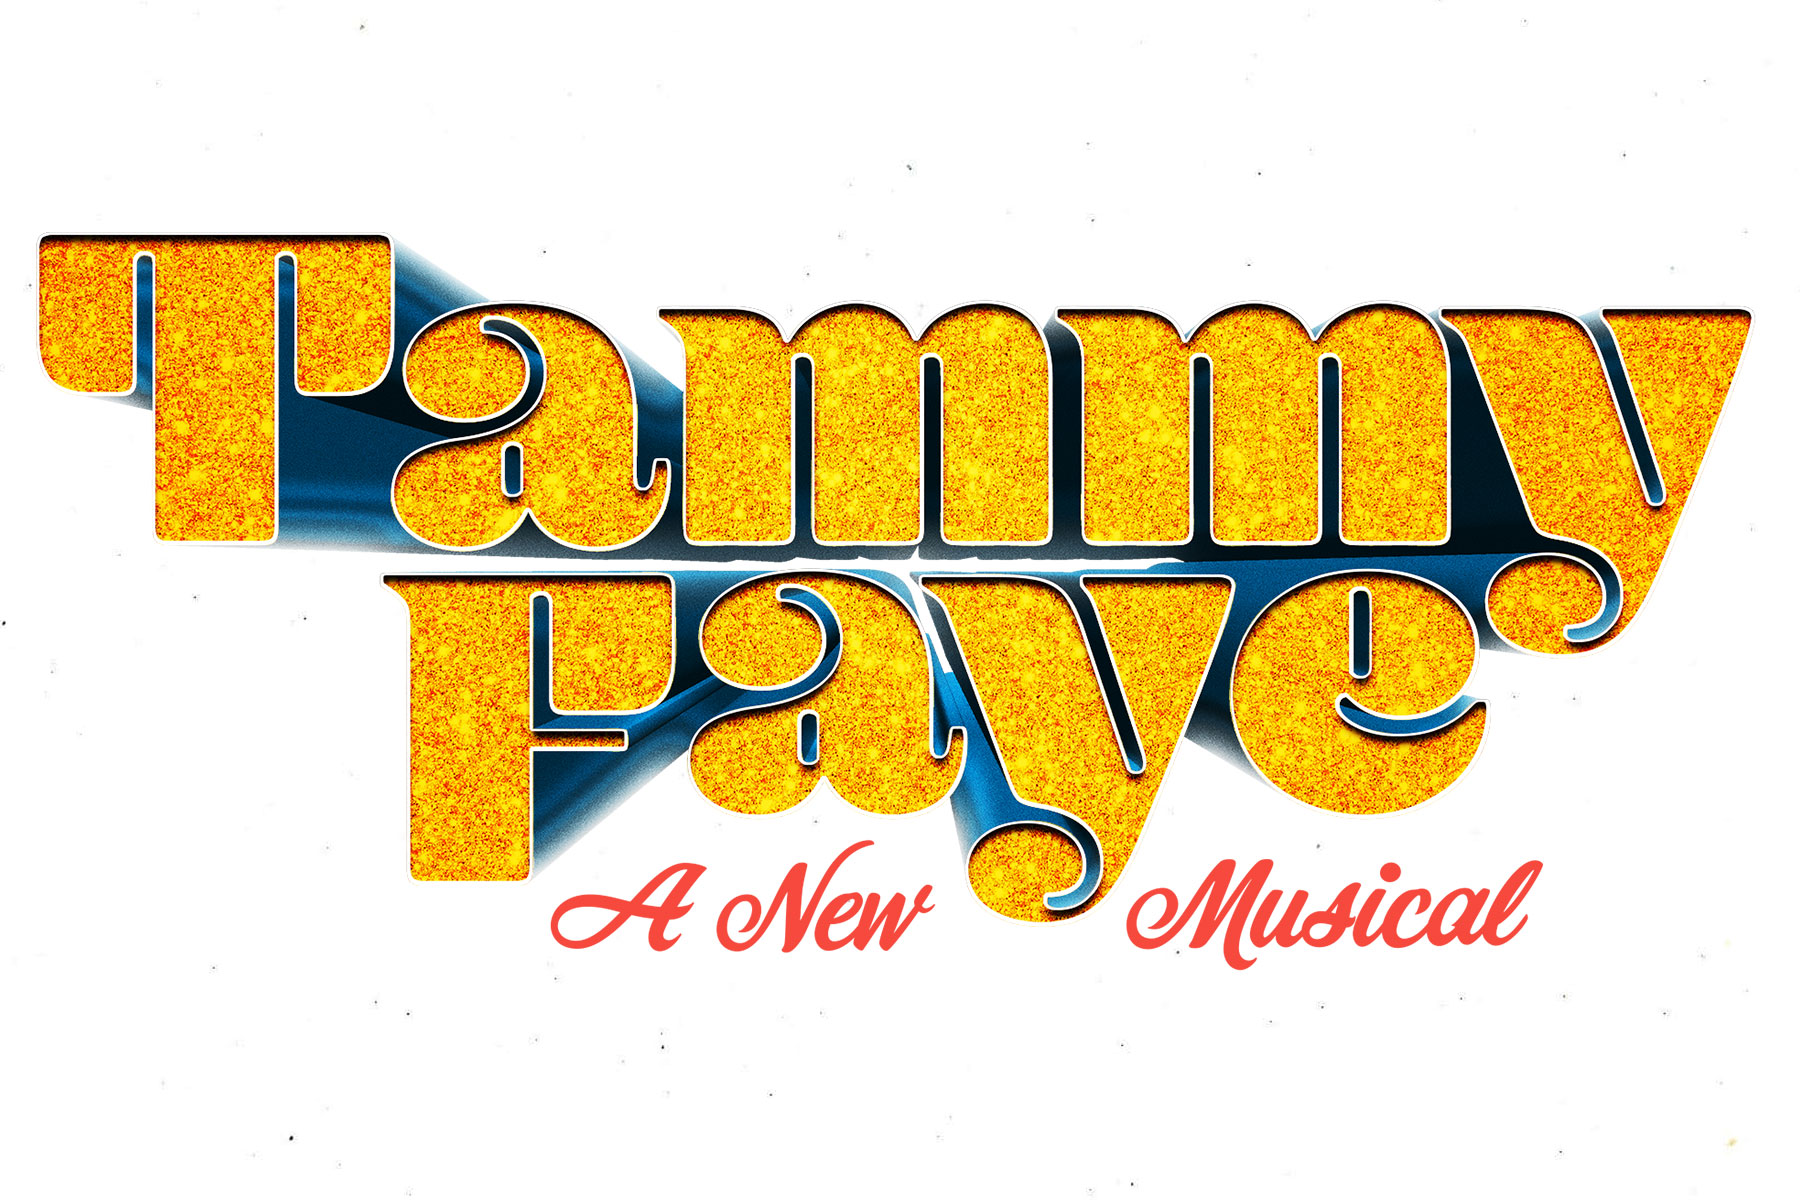 Broadway artwork for Tammy Faye